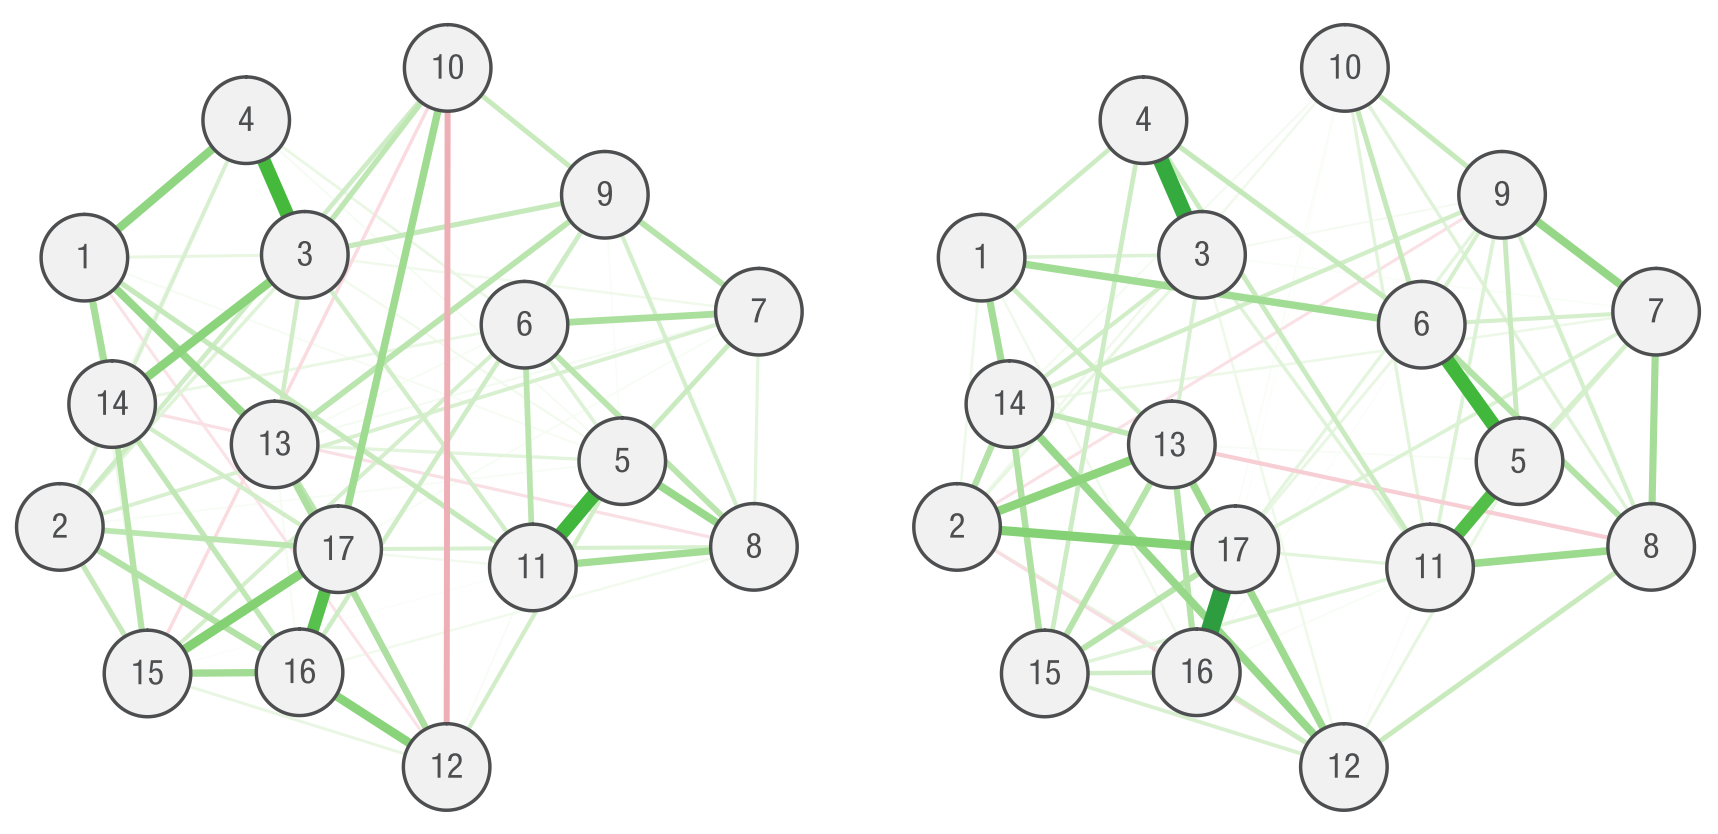 Network replicability